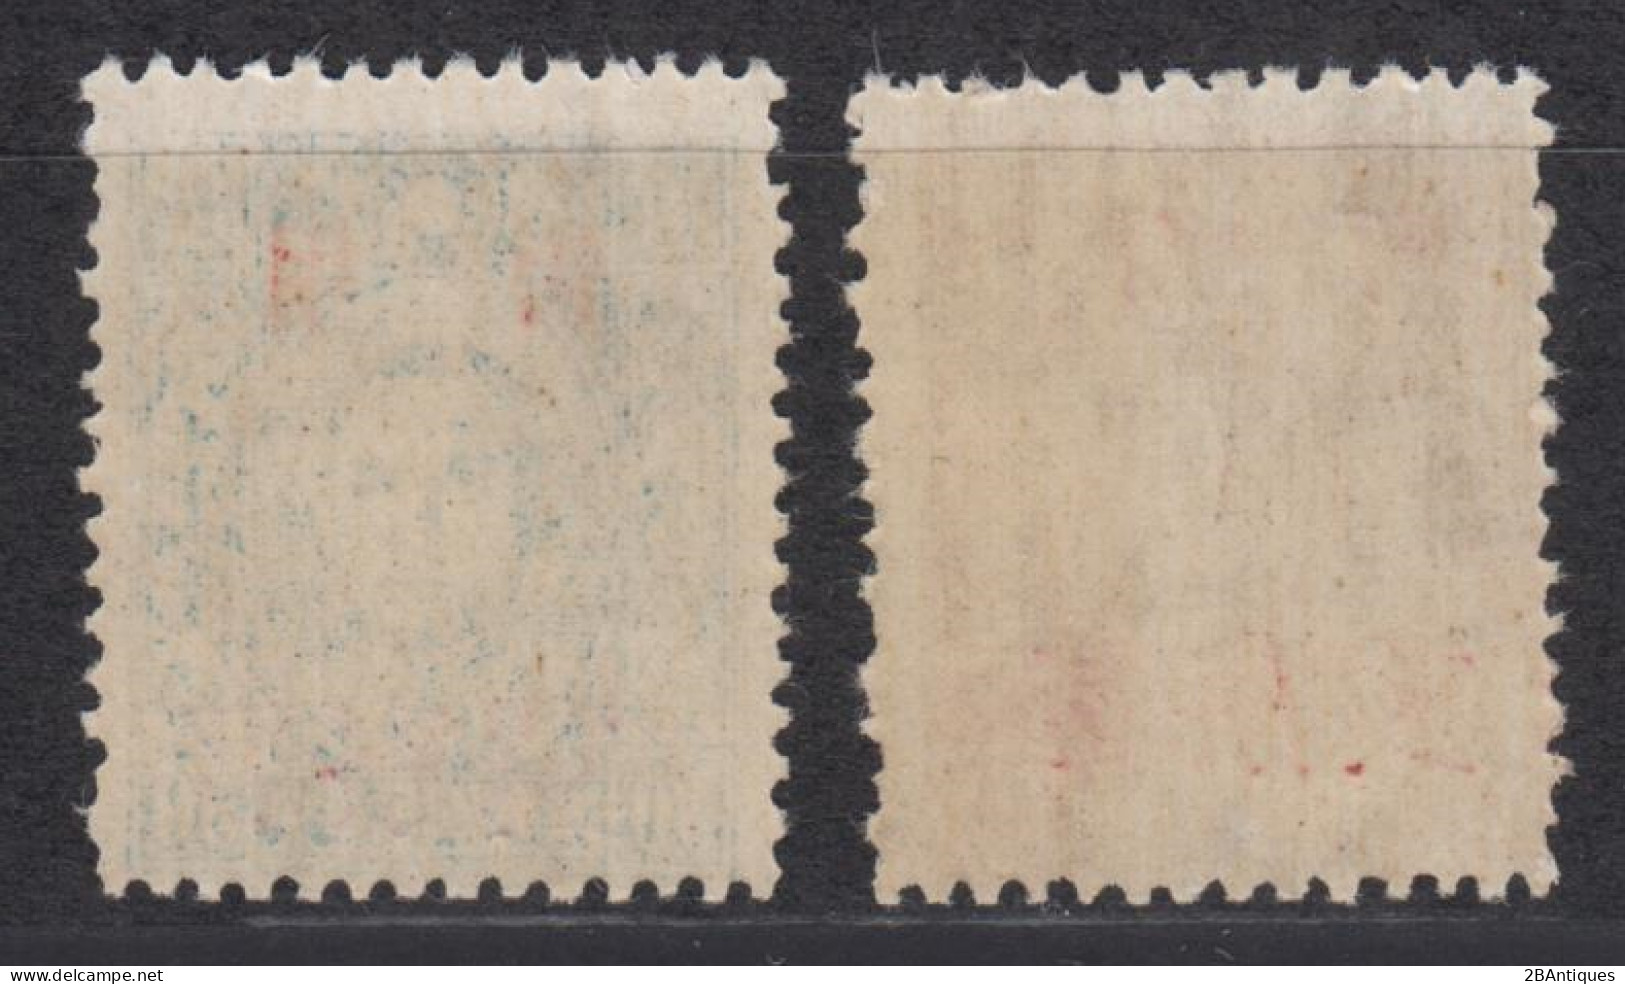 NORTH CHINA SHANXI-QAHAR-HEBEI 1945 - Inner Mongolia Stamps With Overprint "Ji Cha Jin" - Cina Del Nord 1949-50